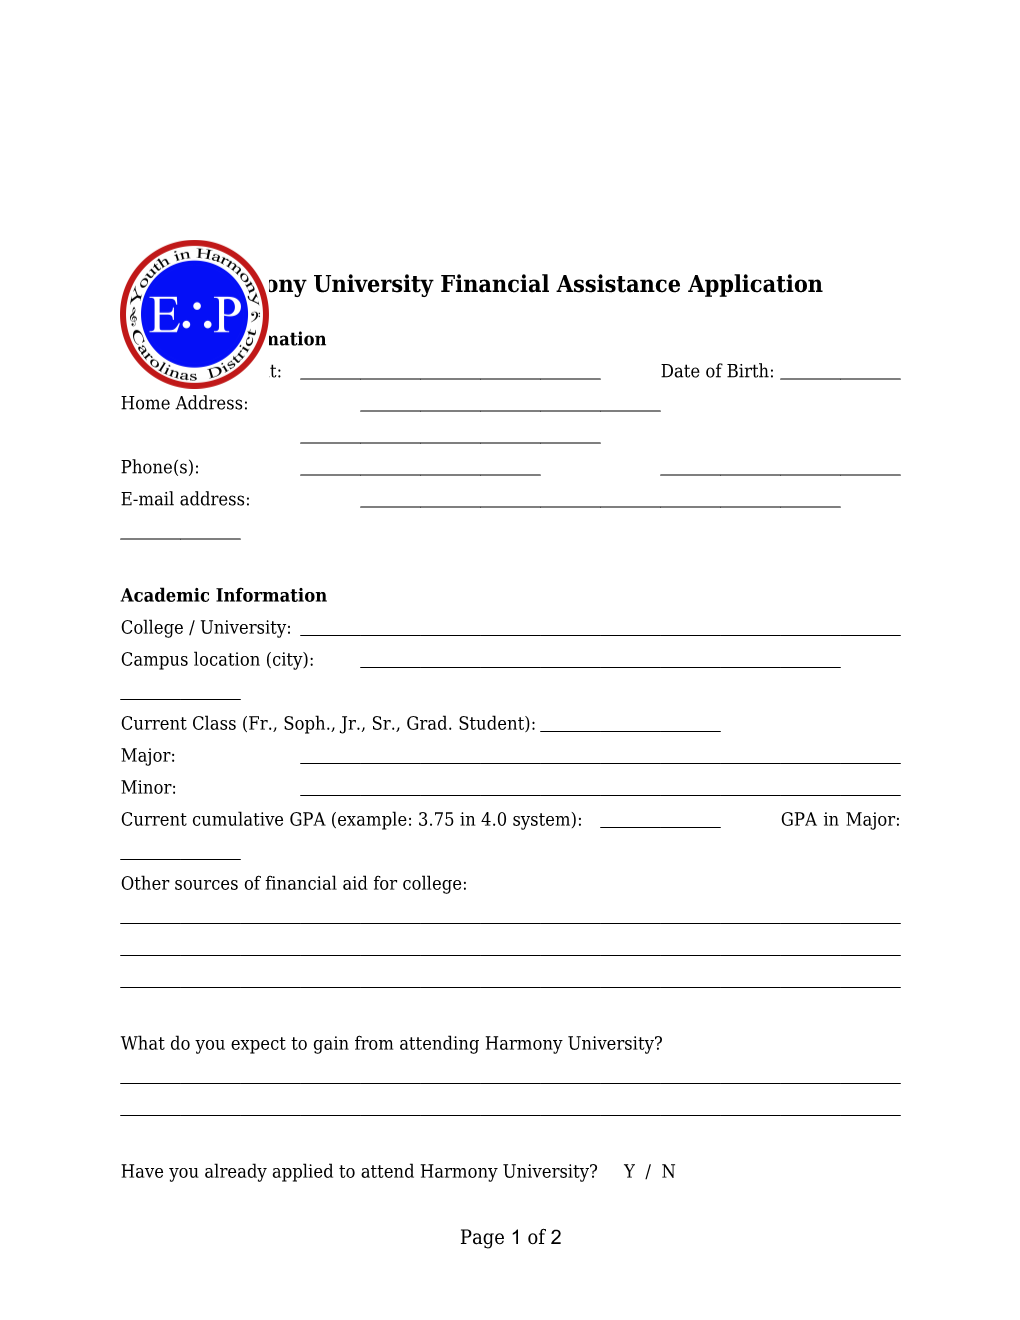 Harmony University Financial Assistance Application